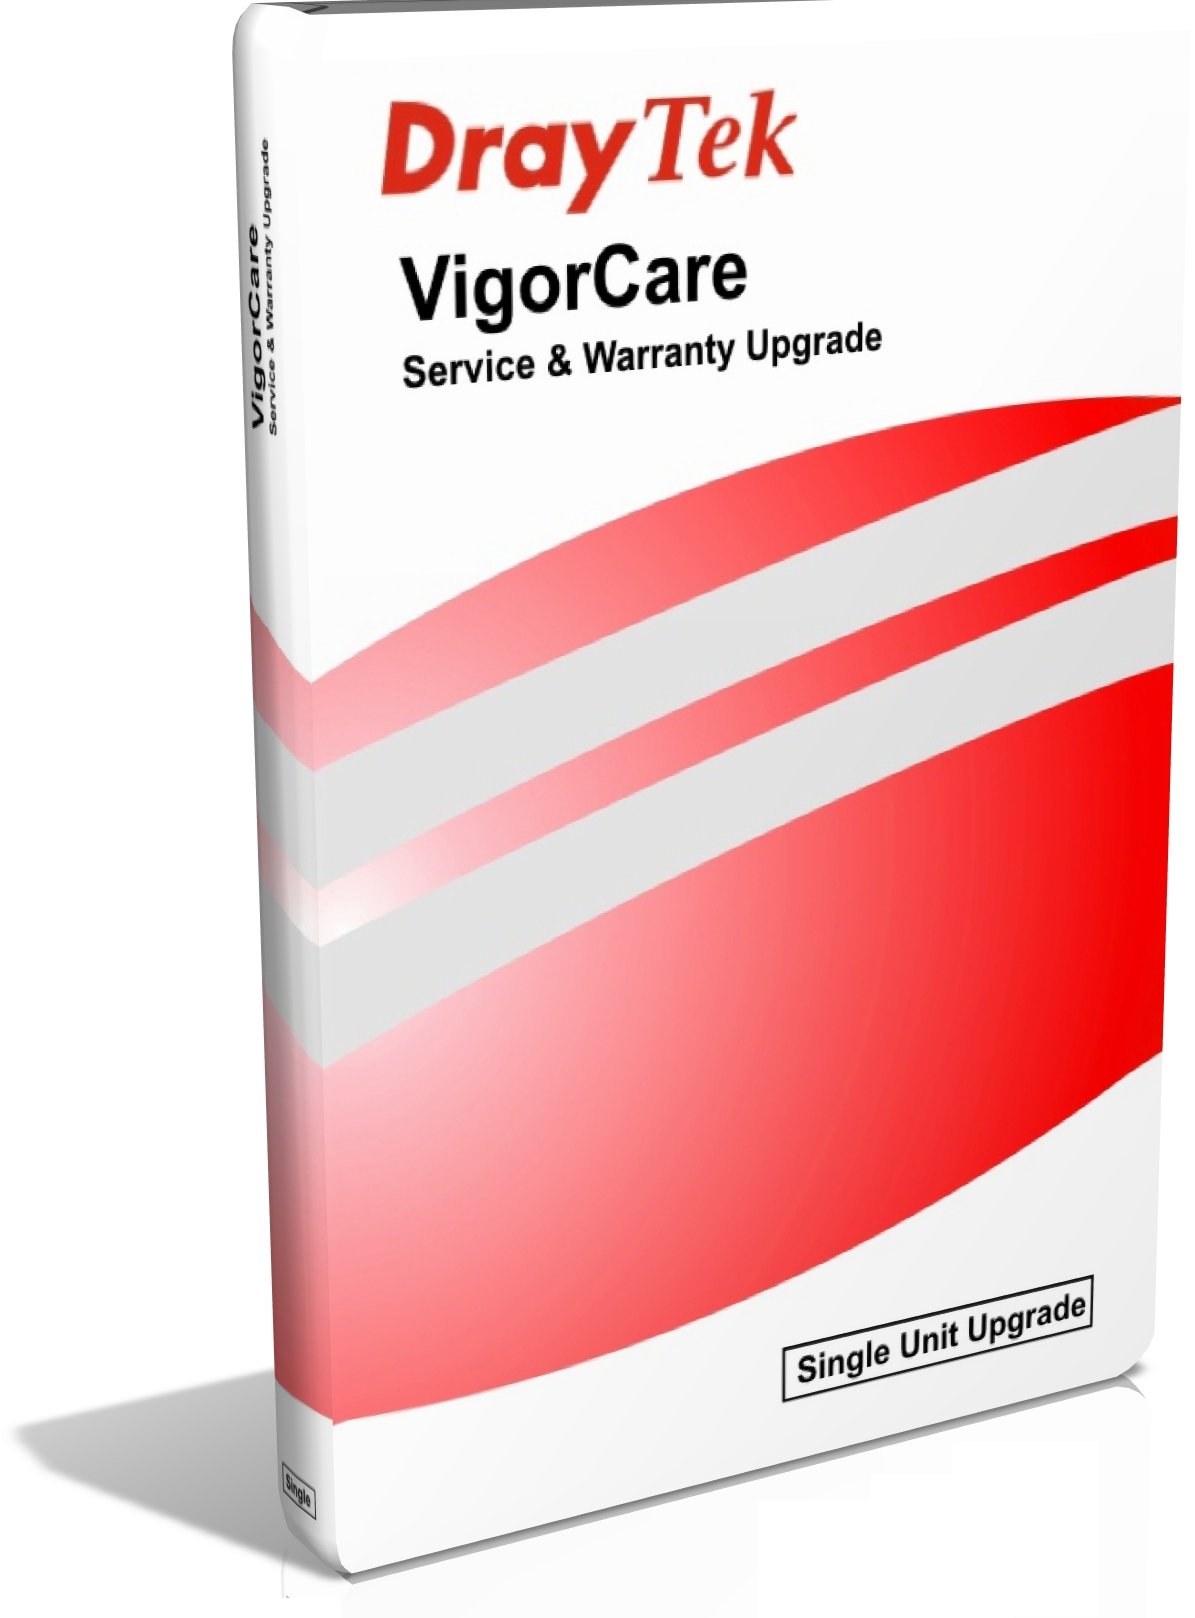 DrayTek VigorCare Extended Warranty B3 3 Year Care Package